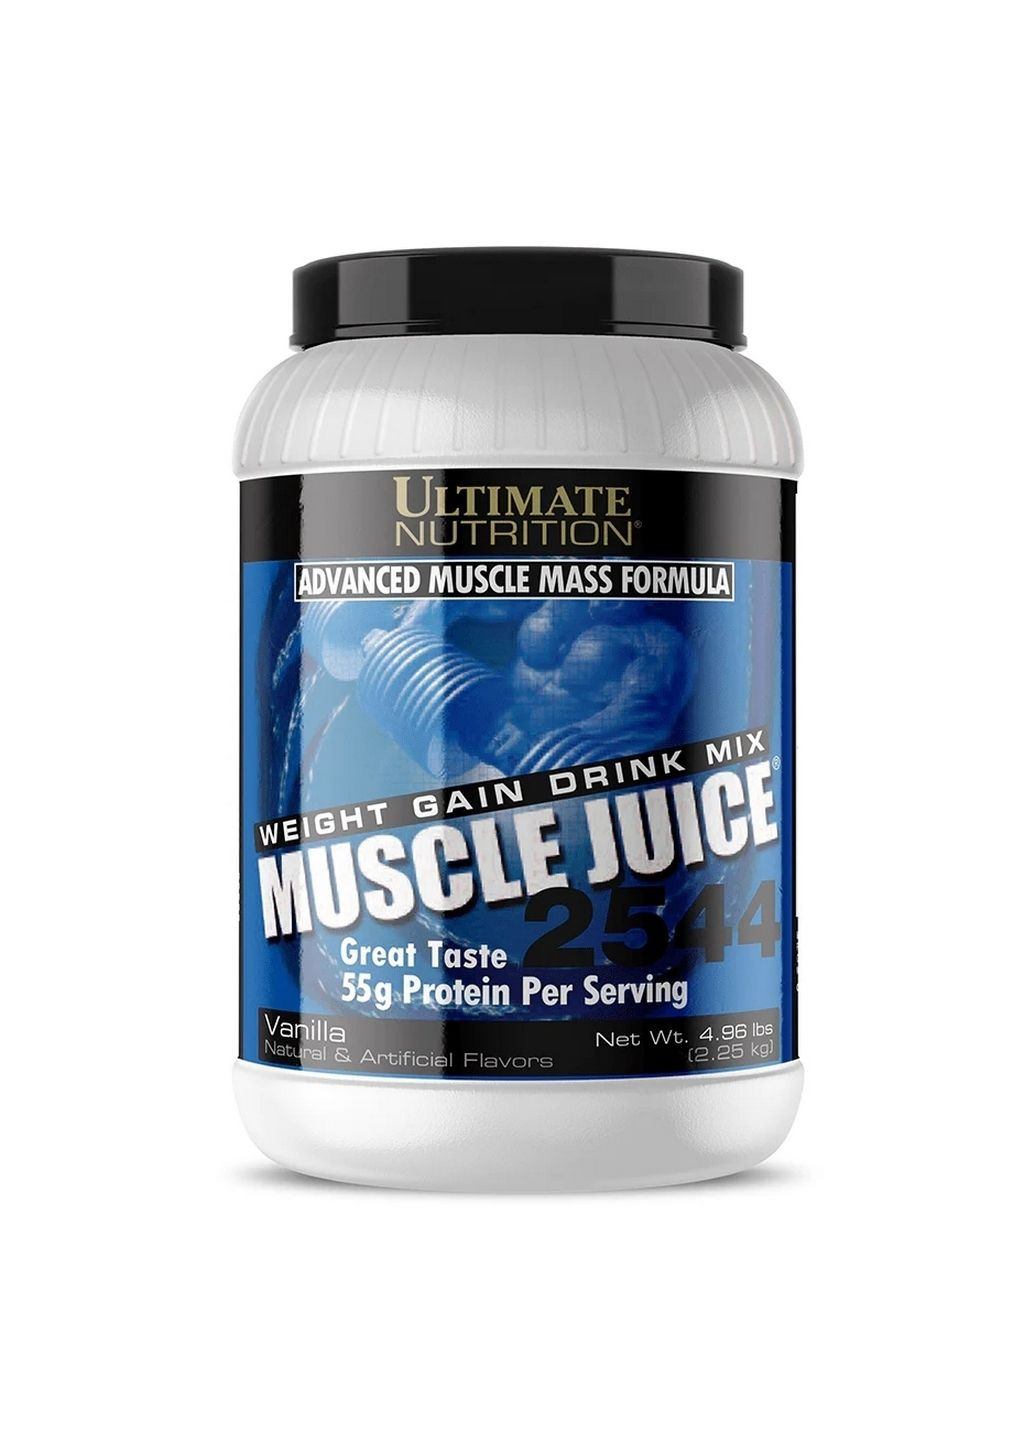 Гейнер Ultimate Muscle Juice 2544, 2.25 кг Ваніль Ultimate Nutrition (293420801)